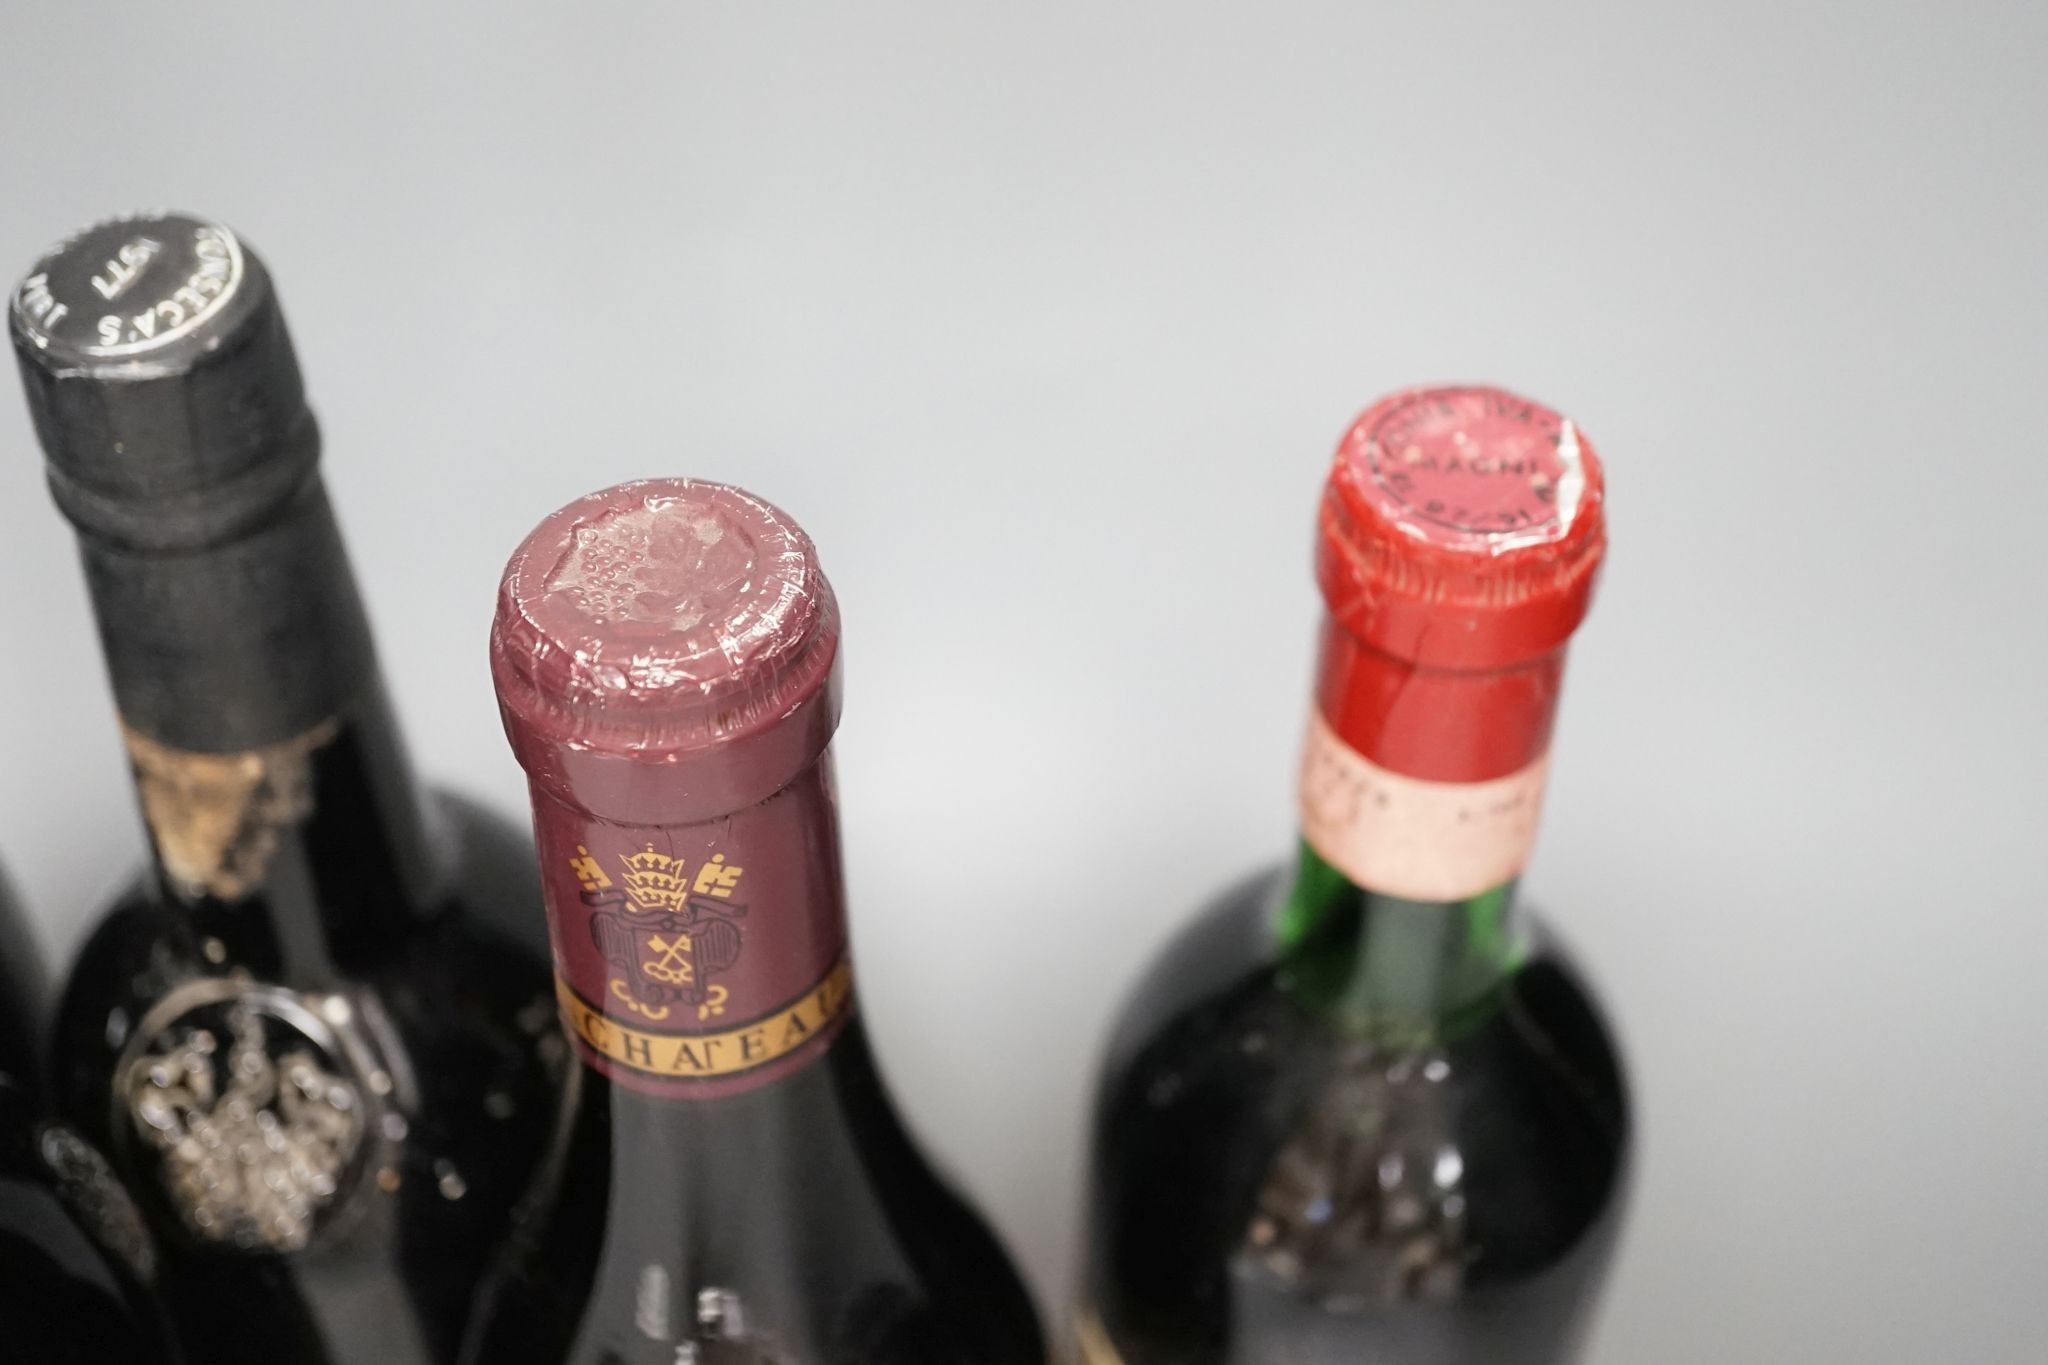 A bottle of Warres 1963 Vintage Port, a bottle of Fonsecca, 1977 Vintage Port and three bottles of wine